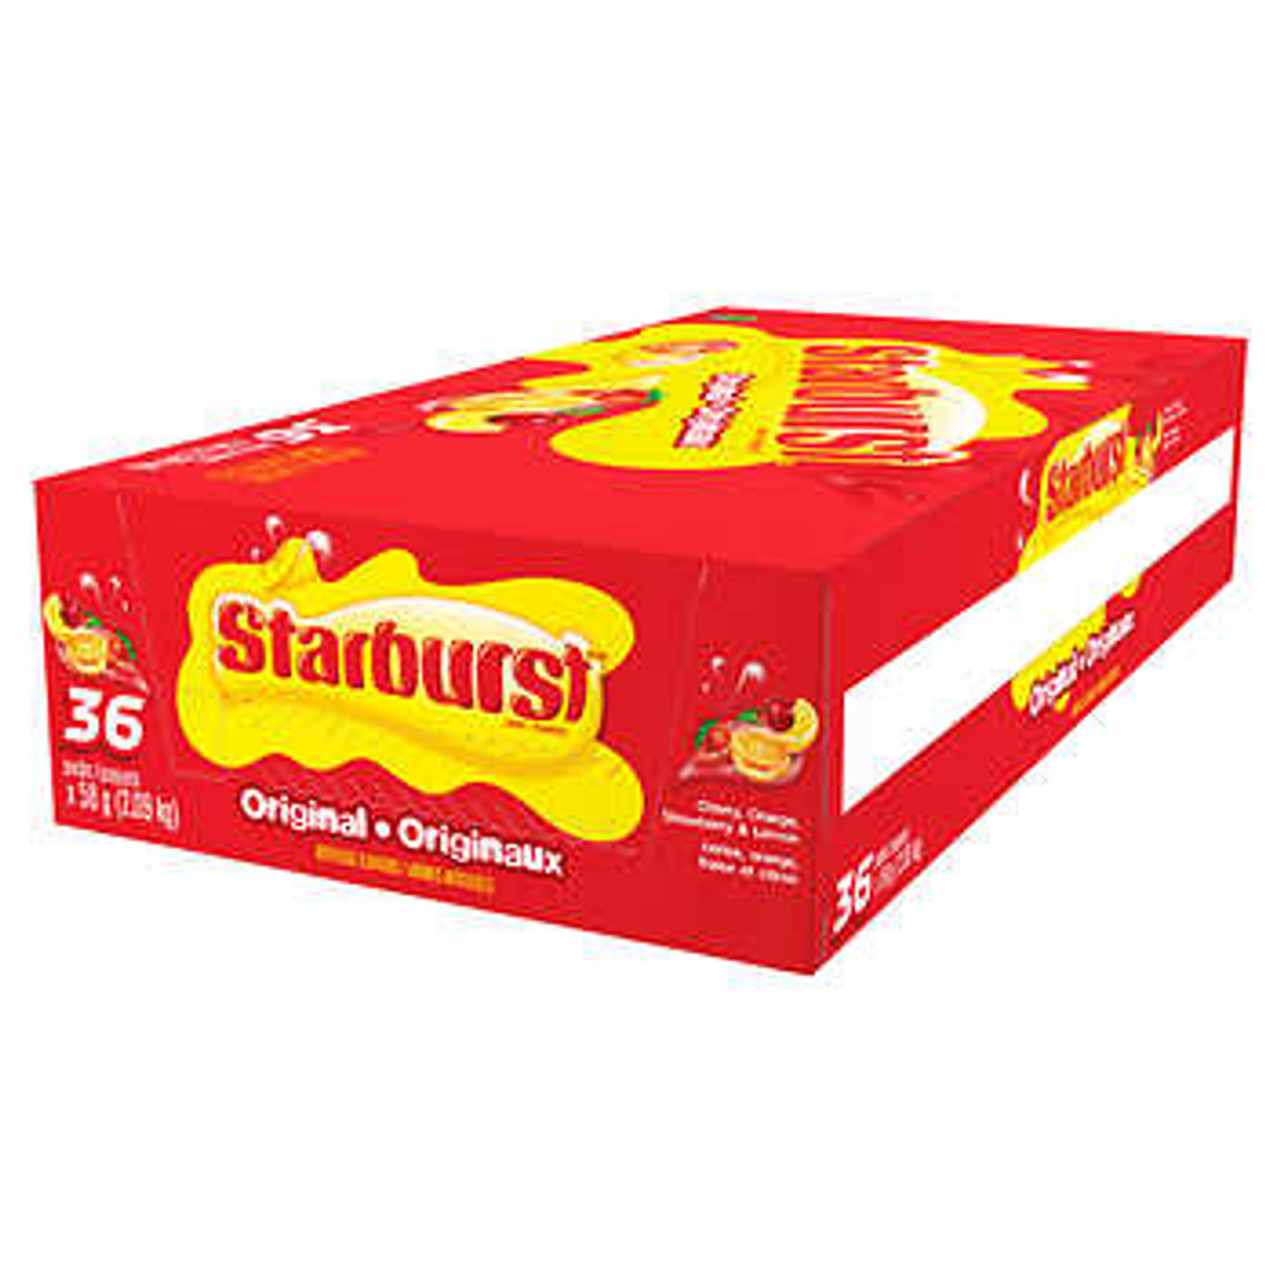 Starburst Original Fruit Candy 36 x 58 g - Unwrap the Flavorful Burst of Fruity Delights- Chicken Pieces